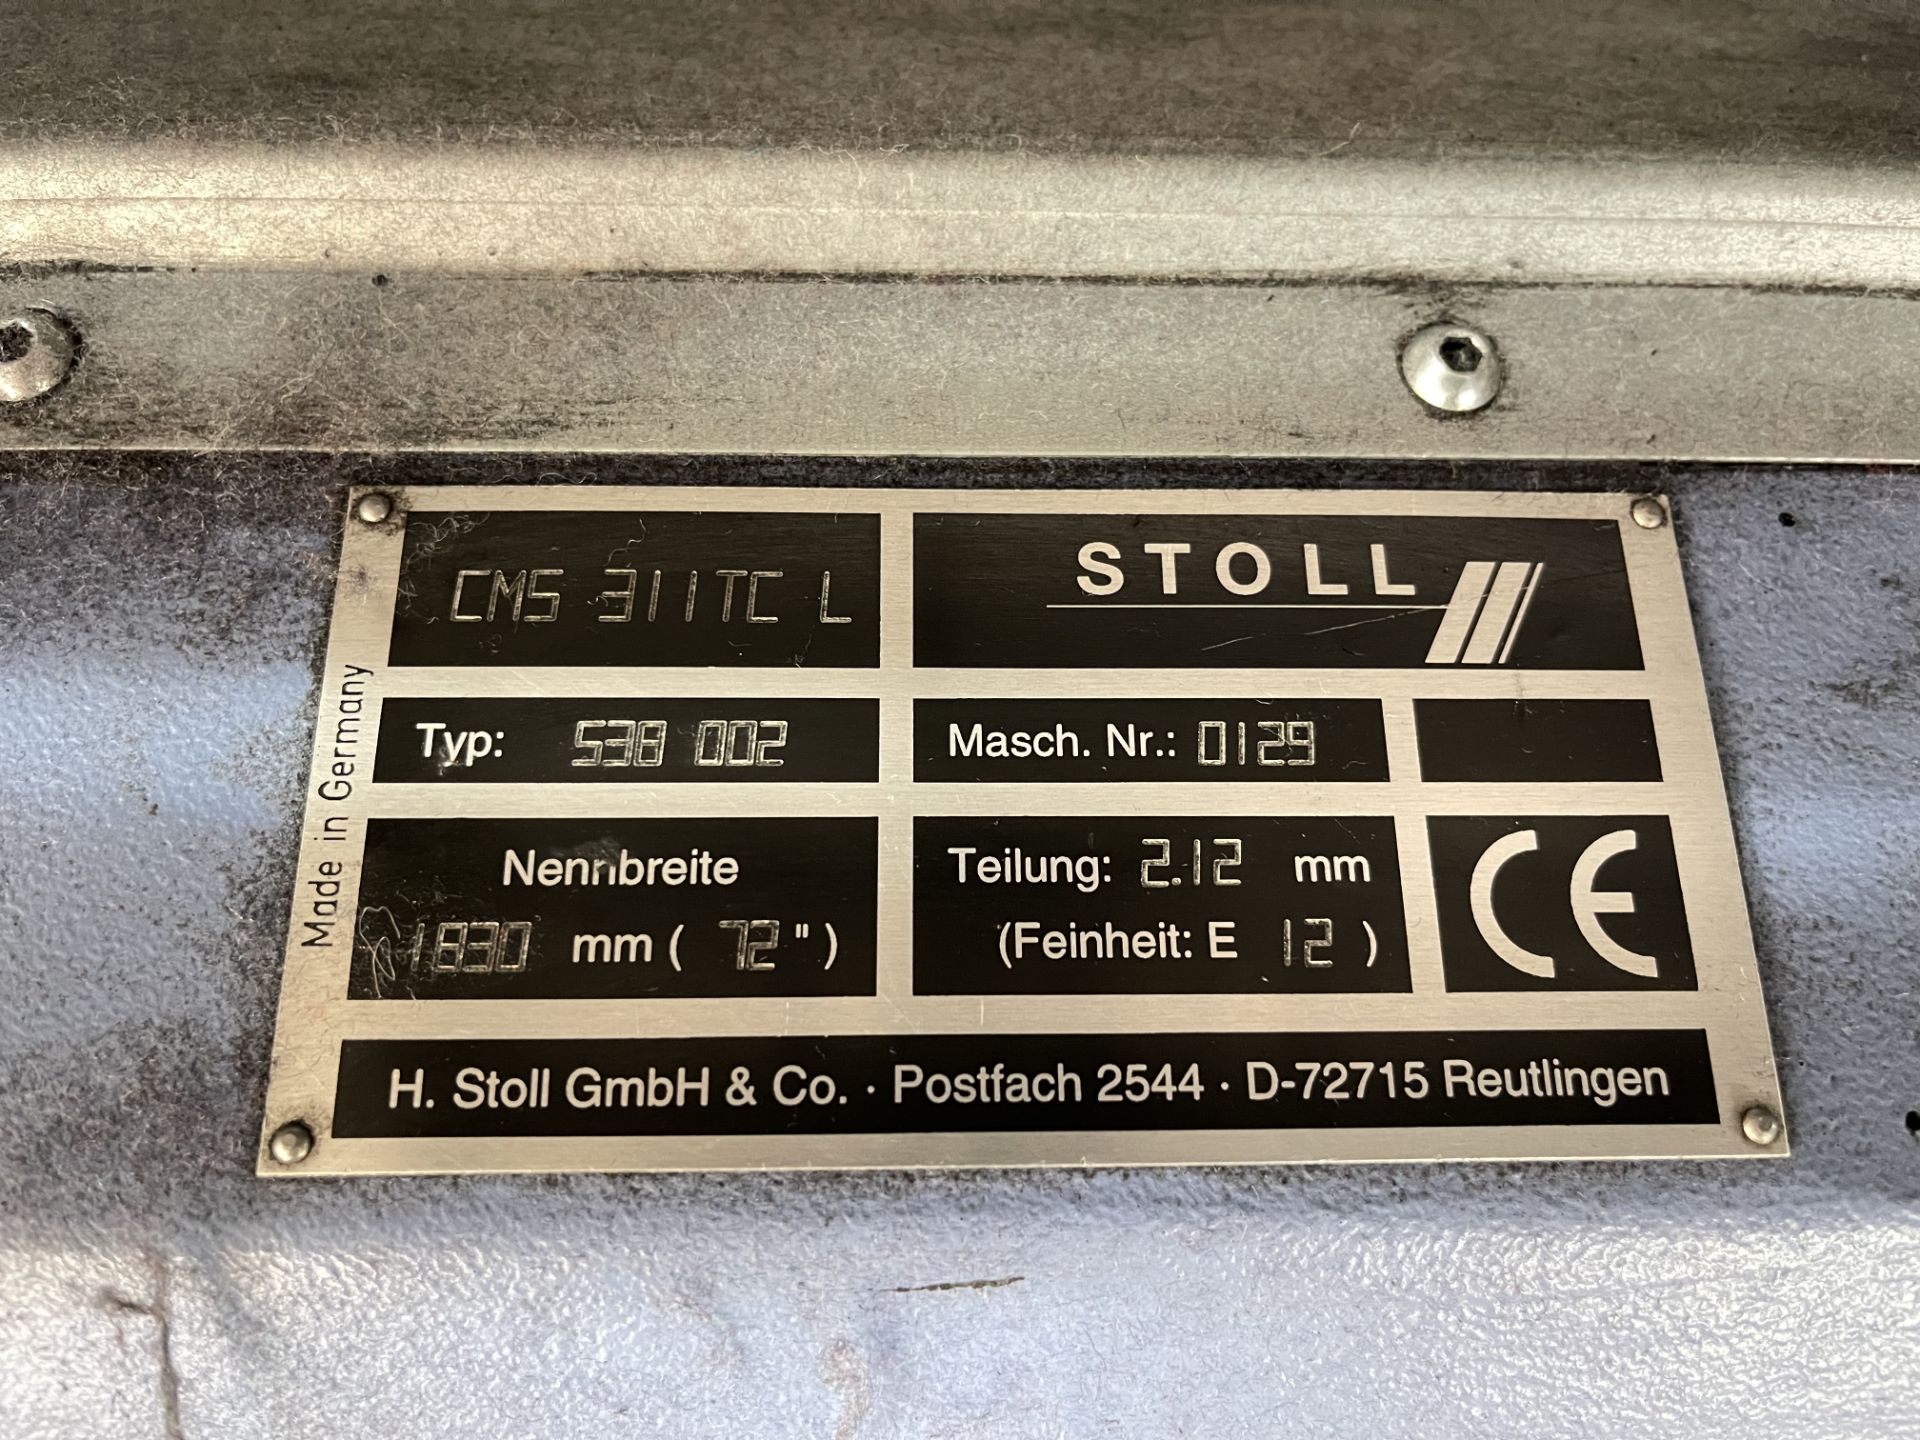 Stoll CMS 311TC L Type 538 002 Flat Bed Knitting Machine - Image 7 of 7